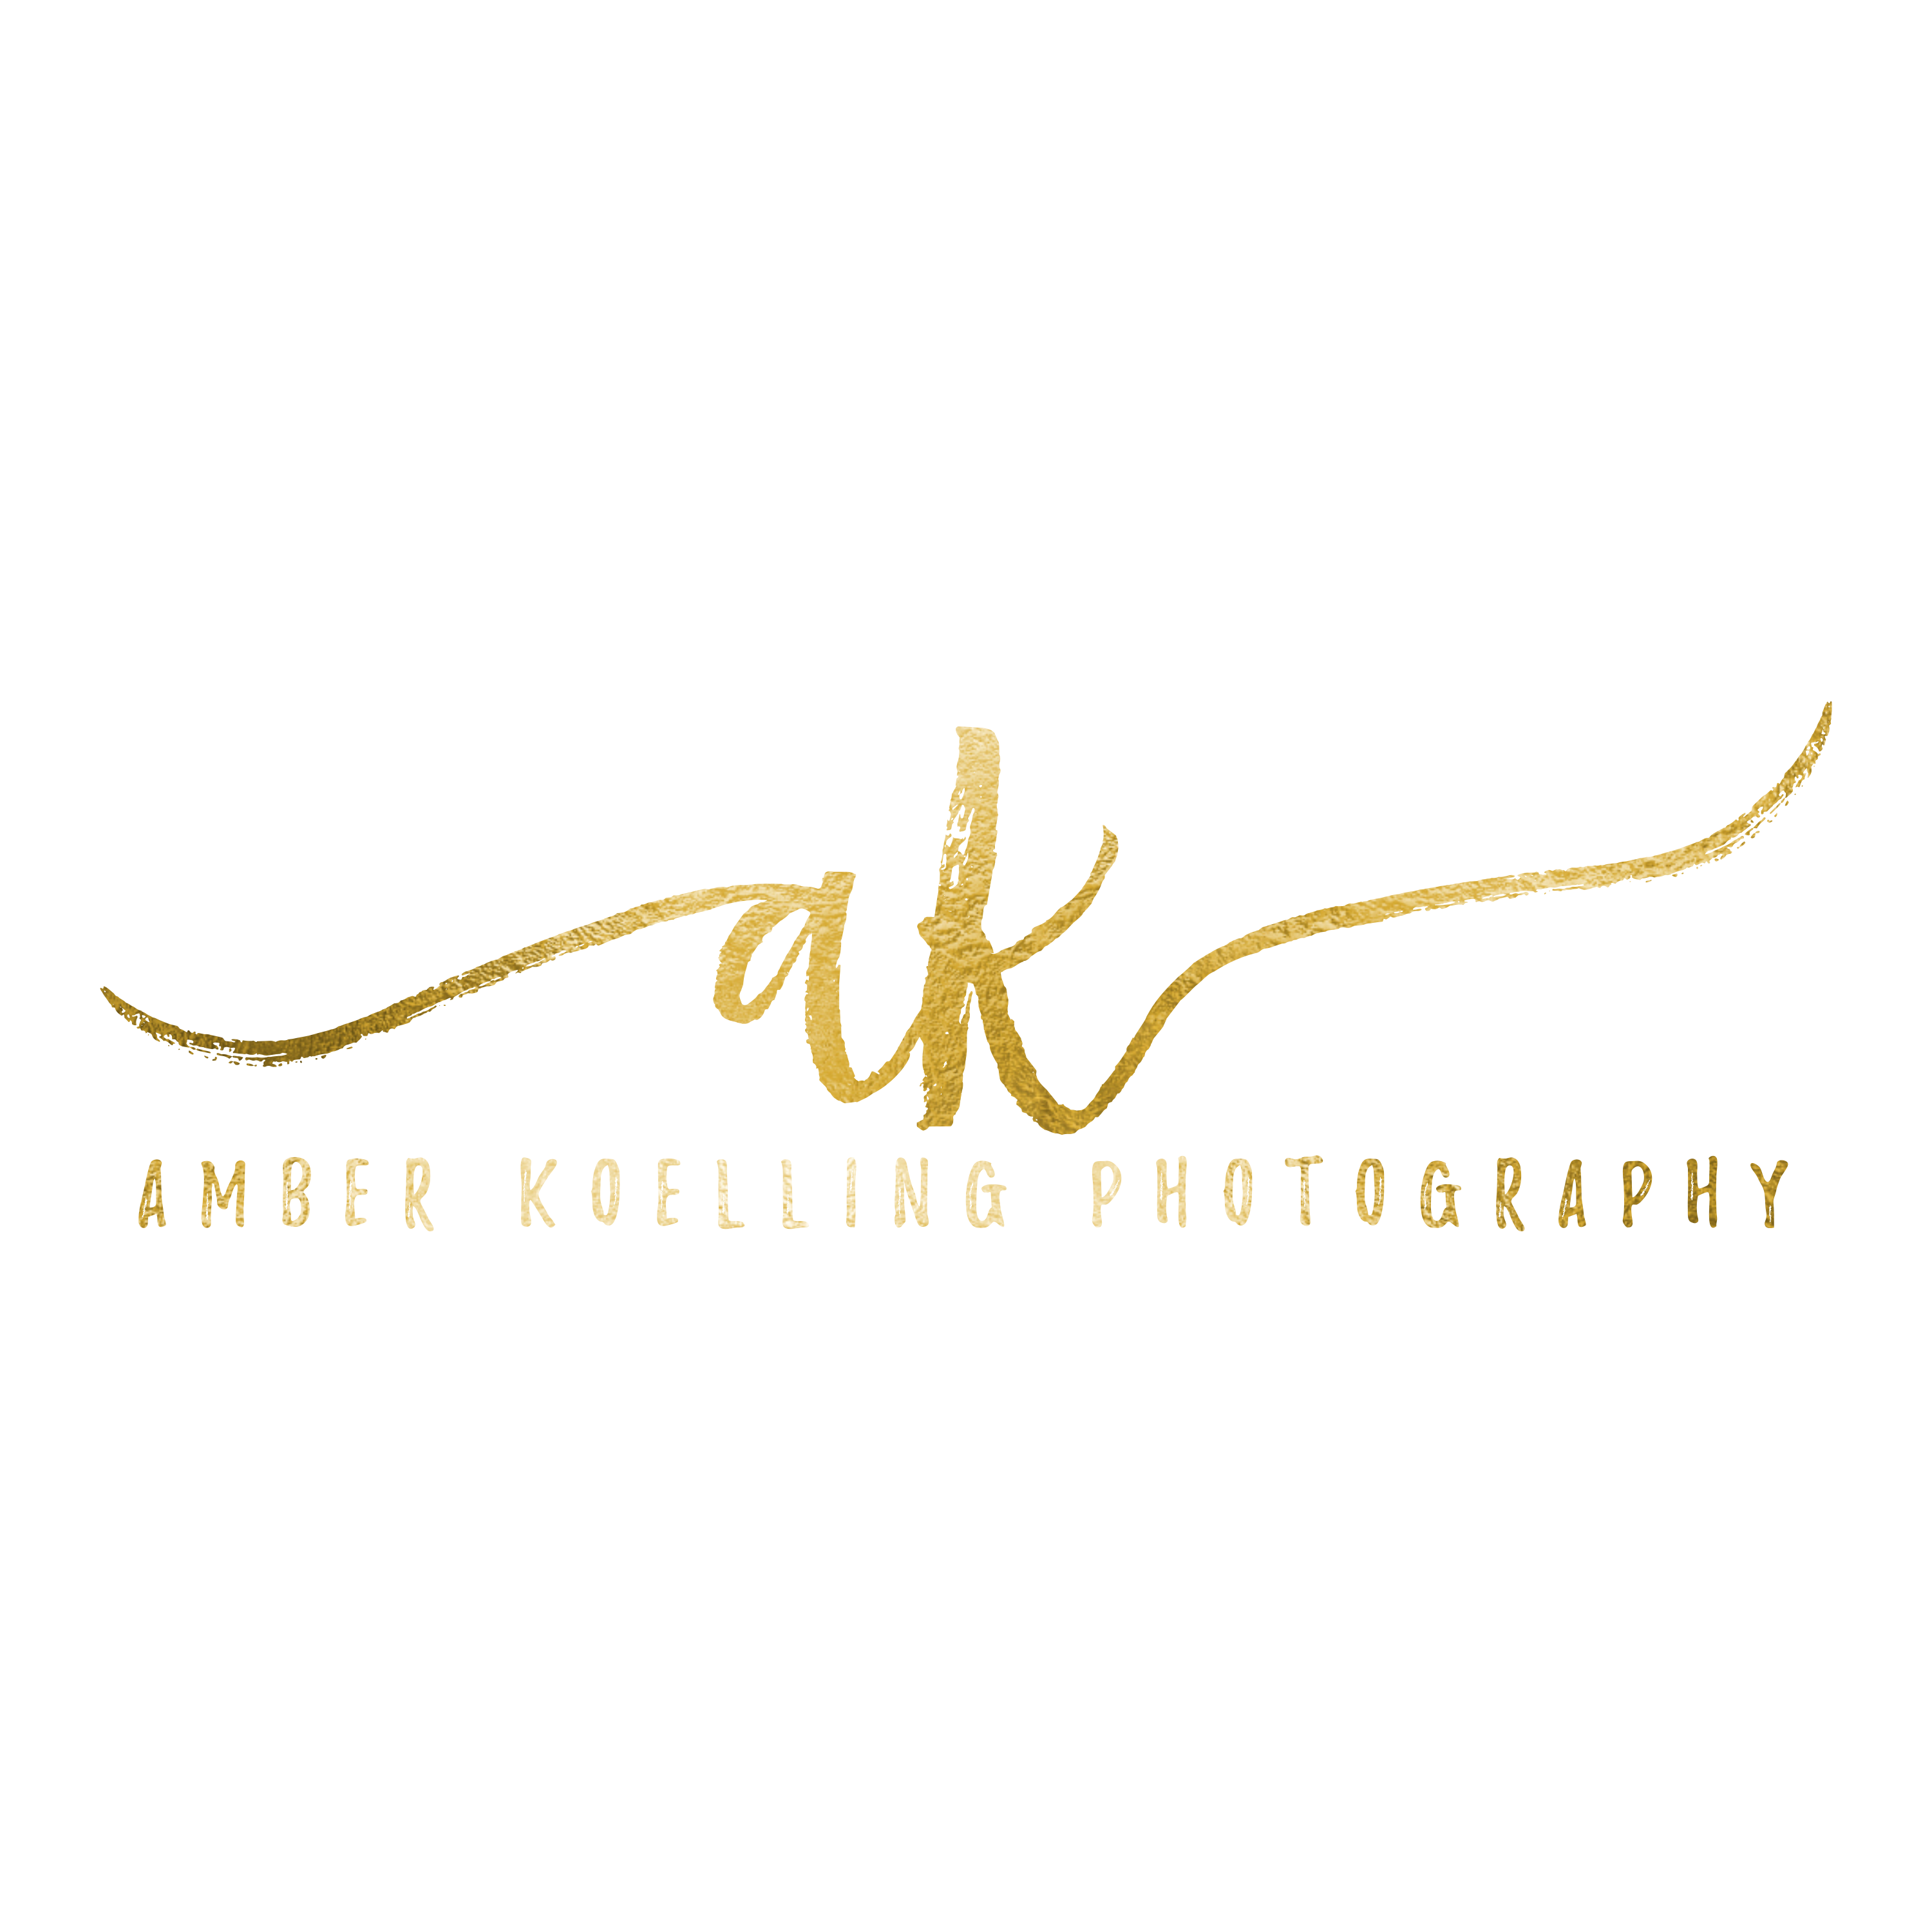 Amber Koelling Photography